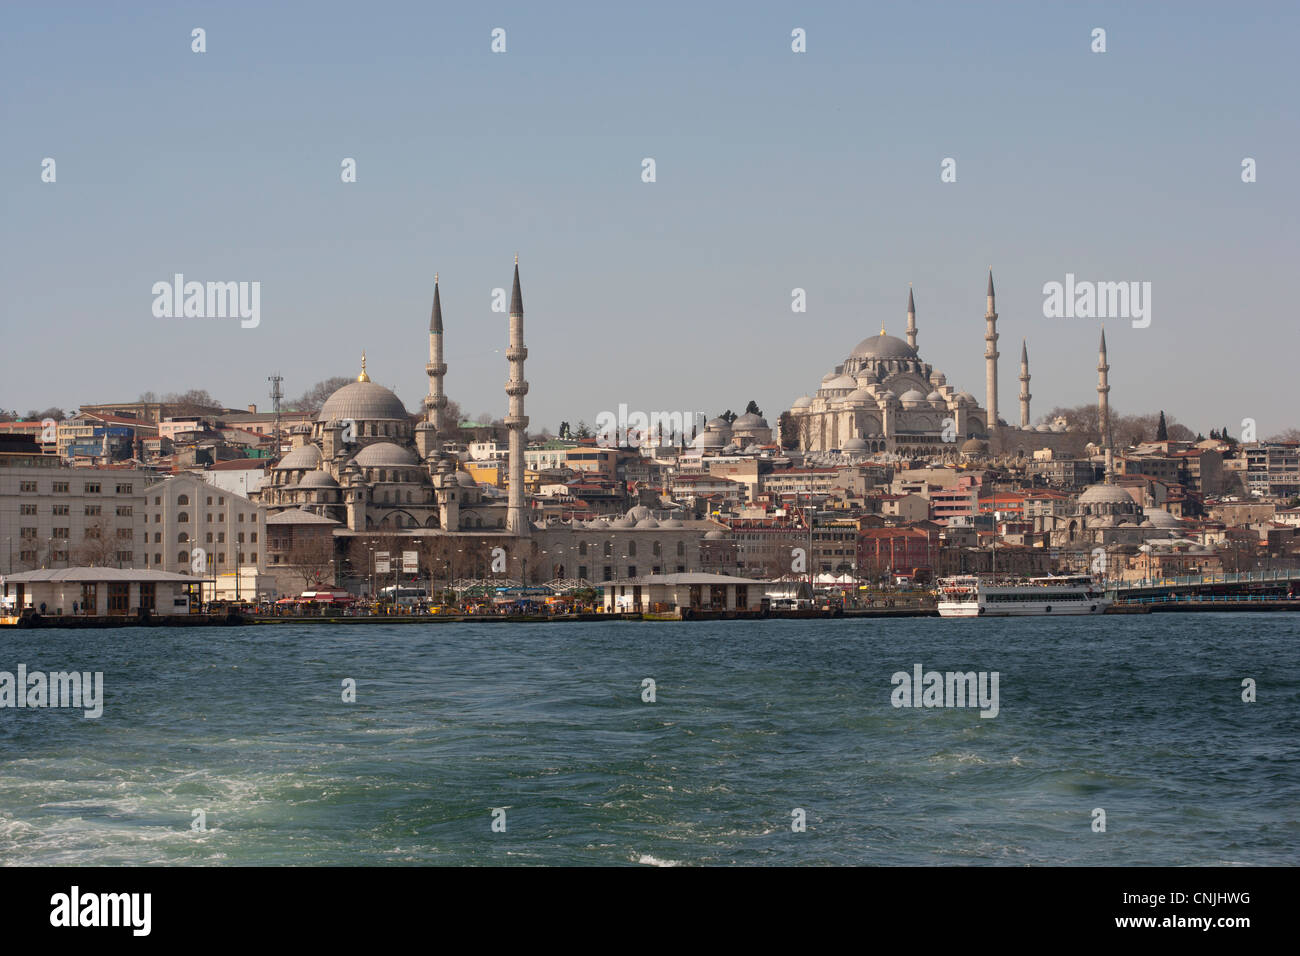 View of Eminonu, Fatih, Istanbul, Turkey from the Bosphorus strait Stock Photo